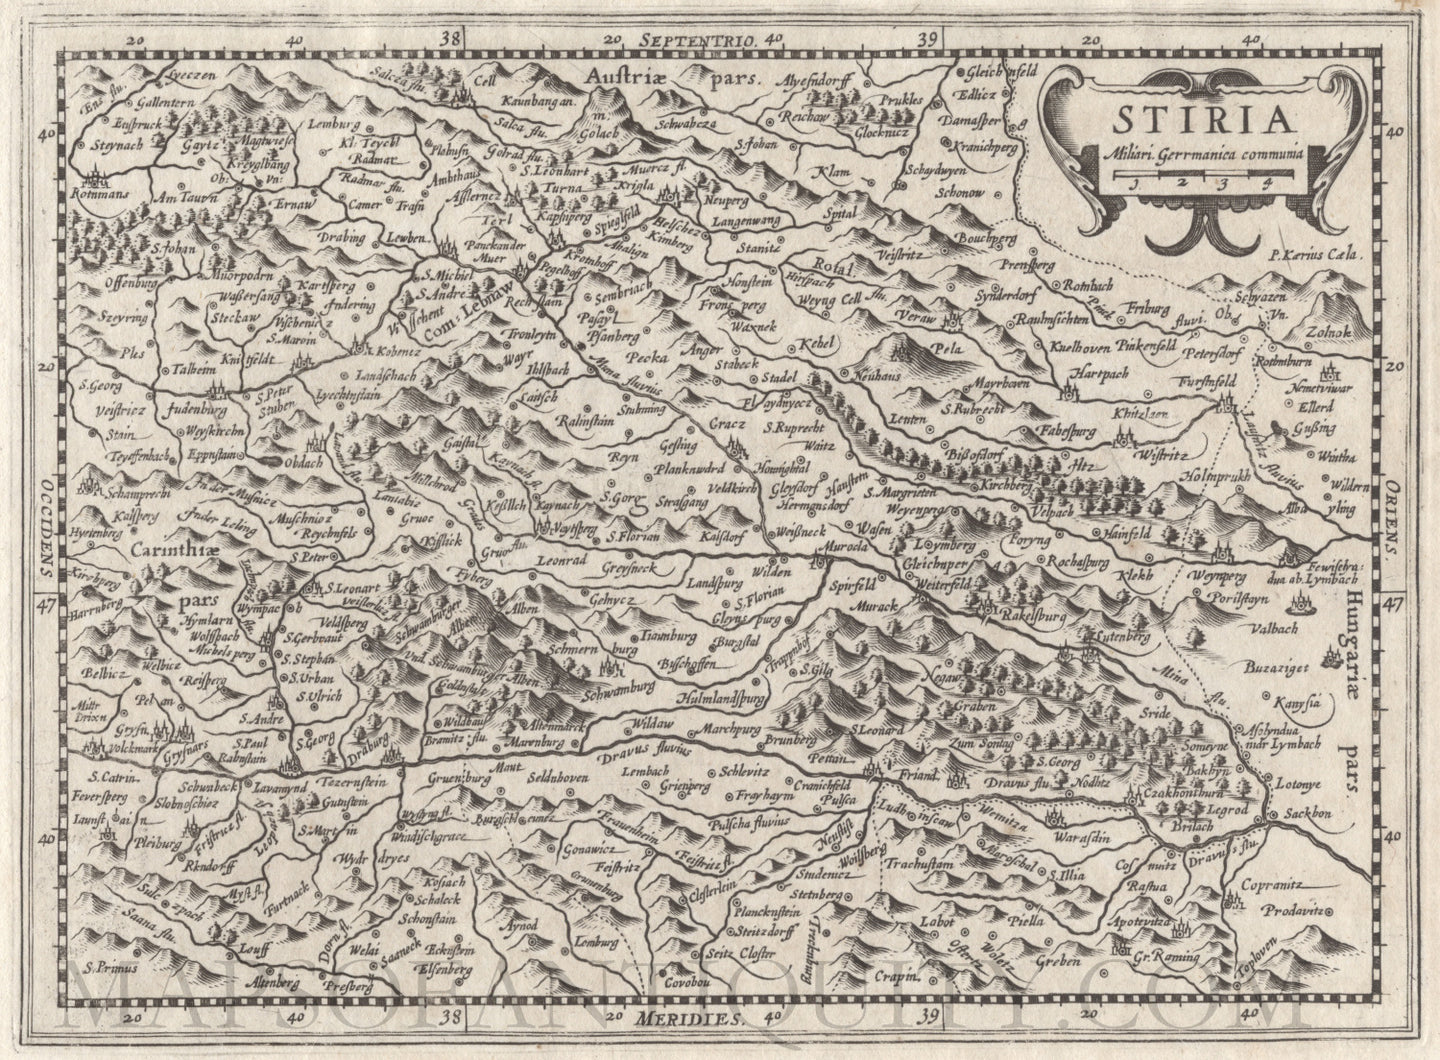 Black-and-white-antique-map-Stiria-Europe-Austria-1632-Mercator-Maps-Of-Antiquity